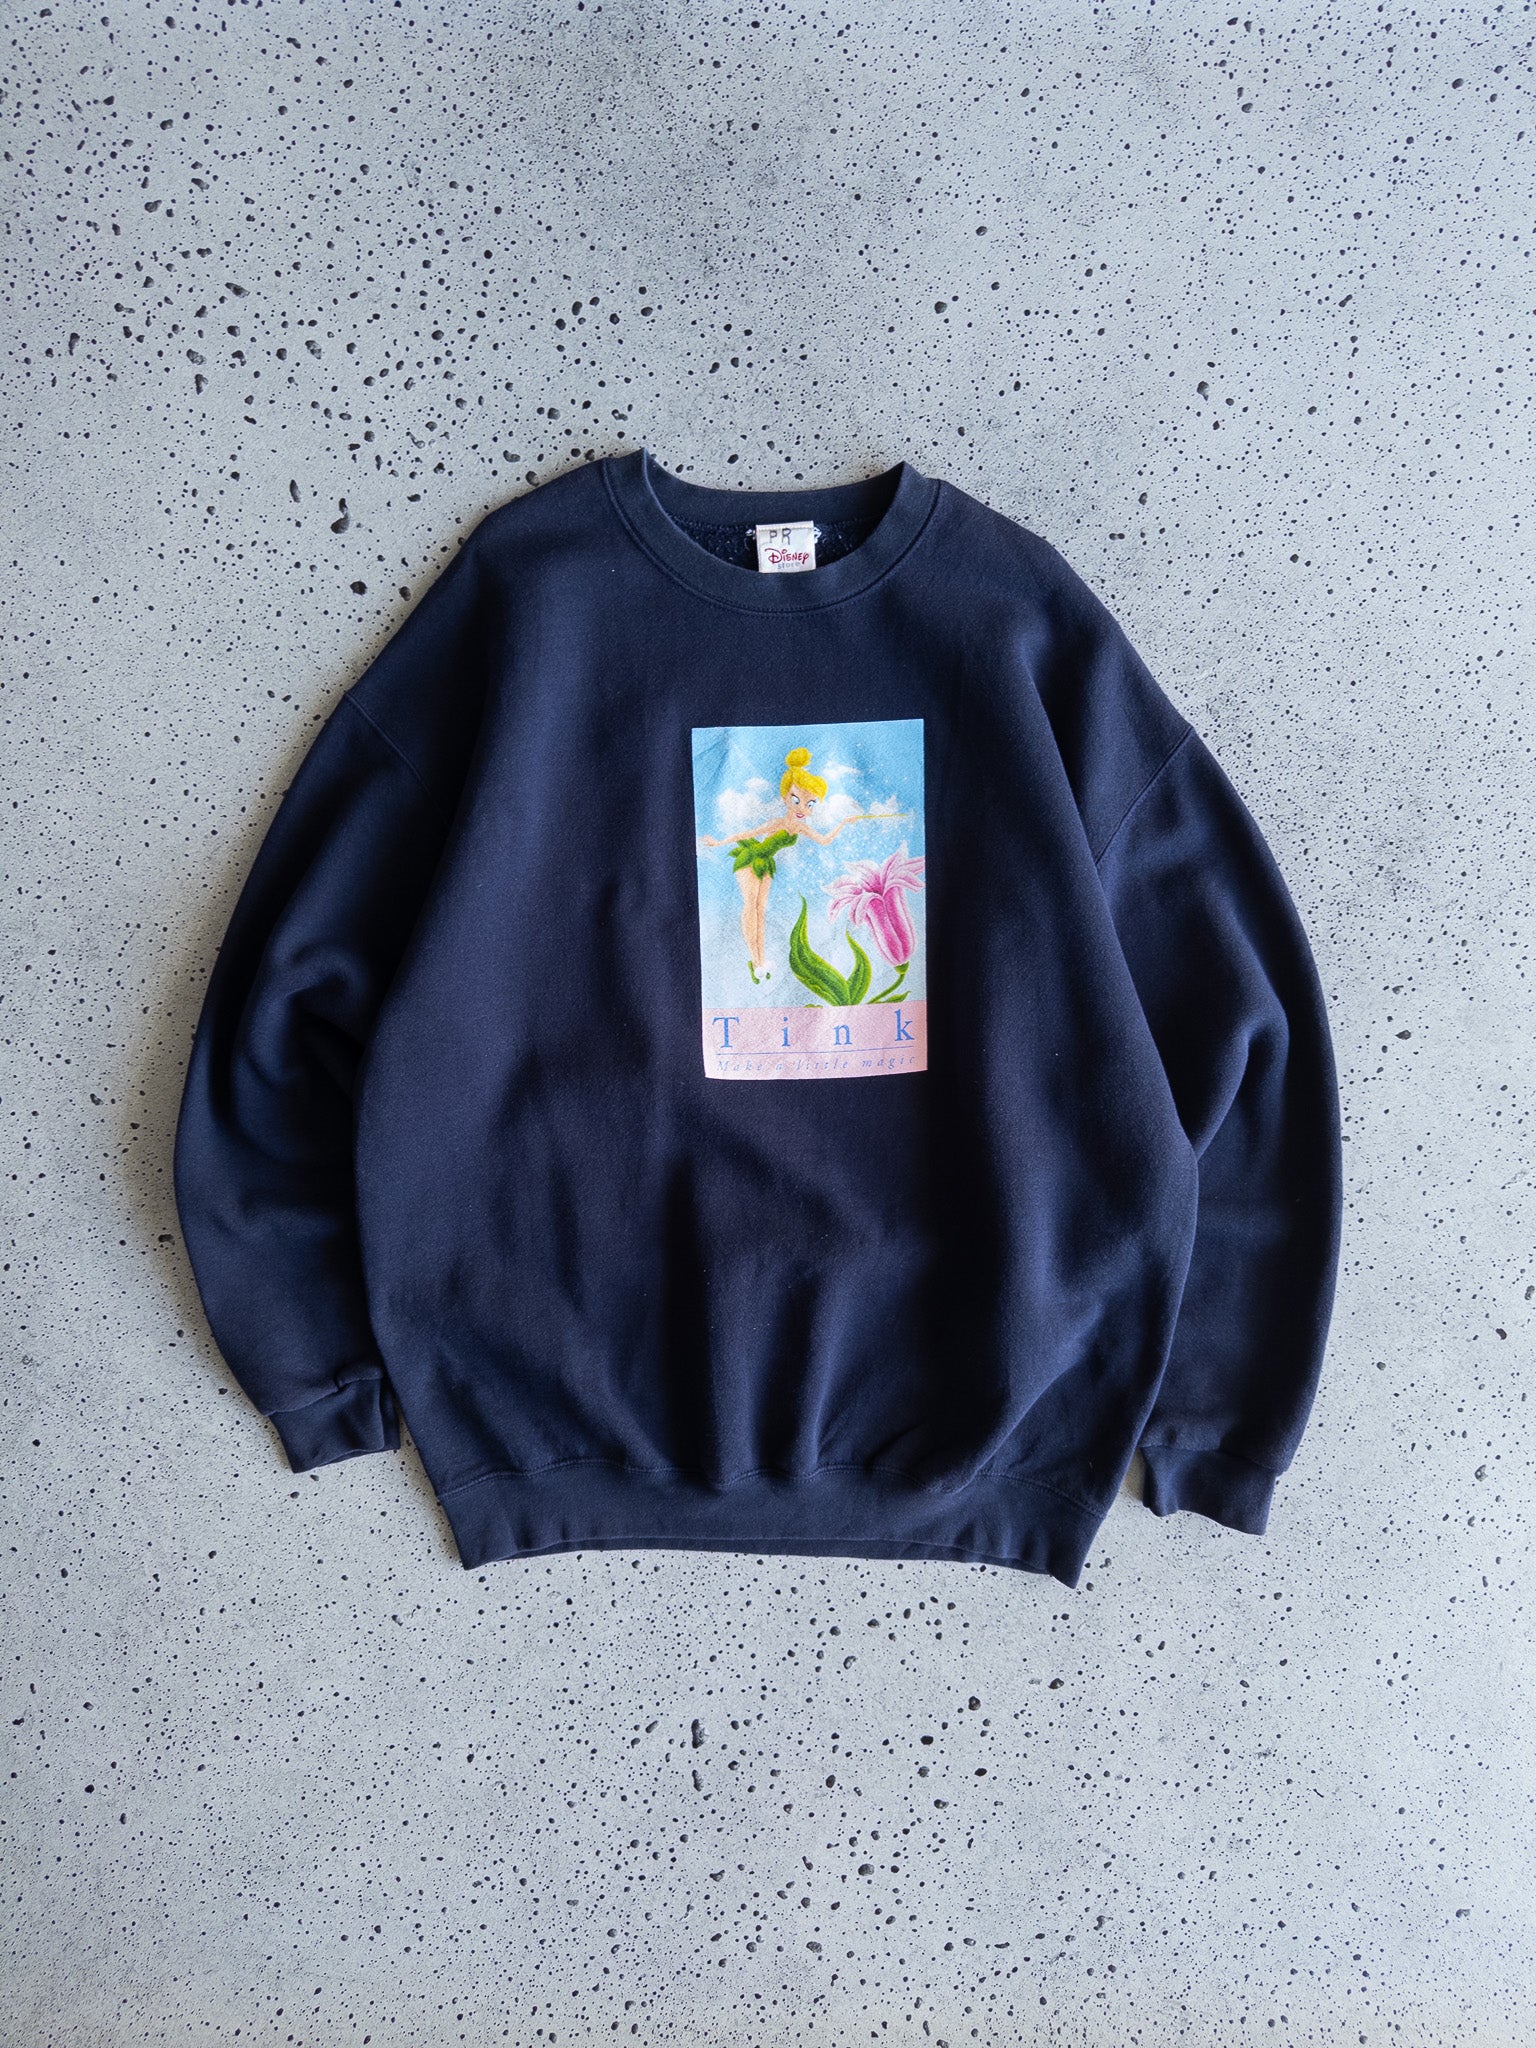 Vintage Tinkerbell Sweatshirt (XL)